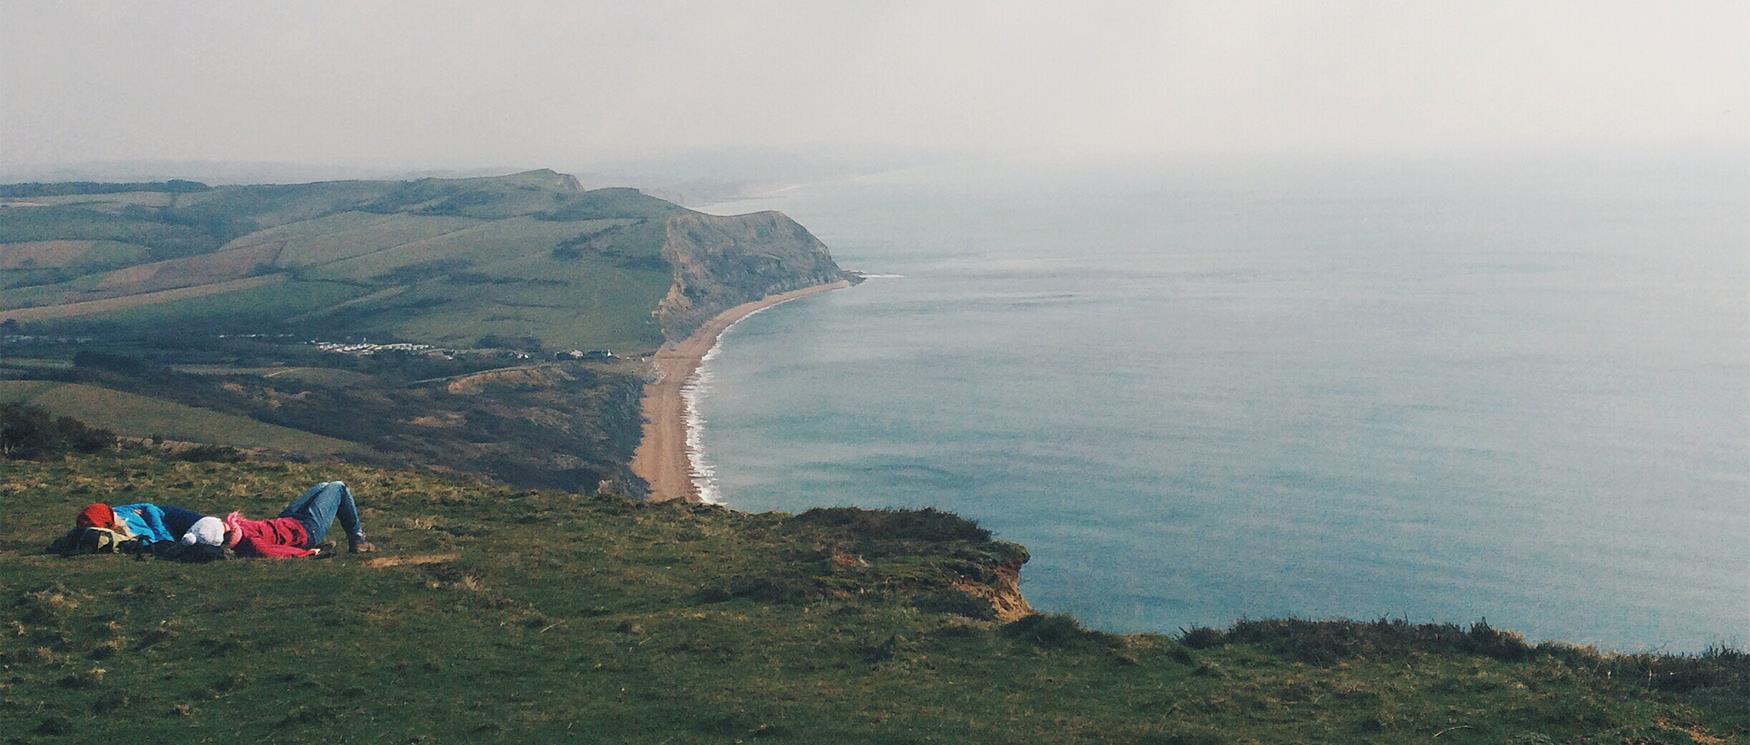 The Jurassic Coast, Dorset